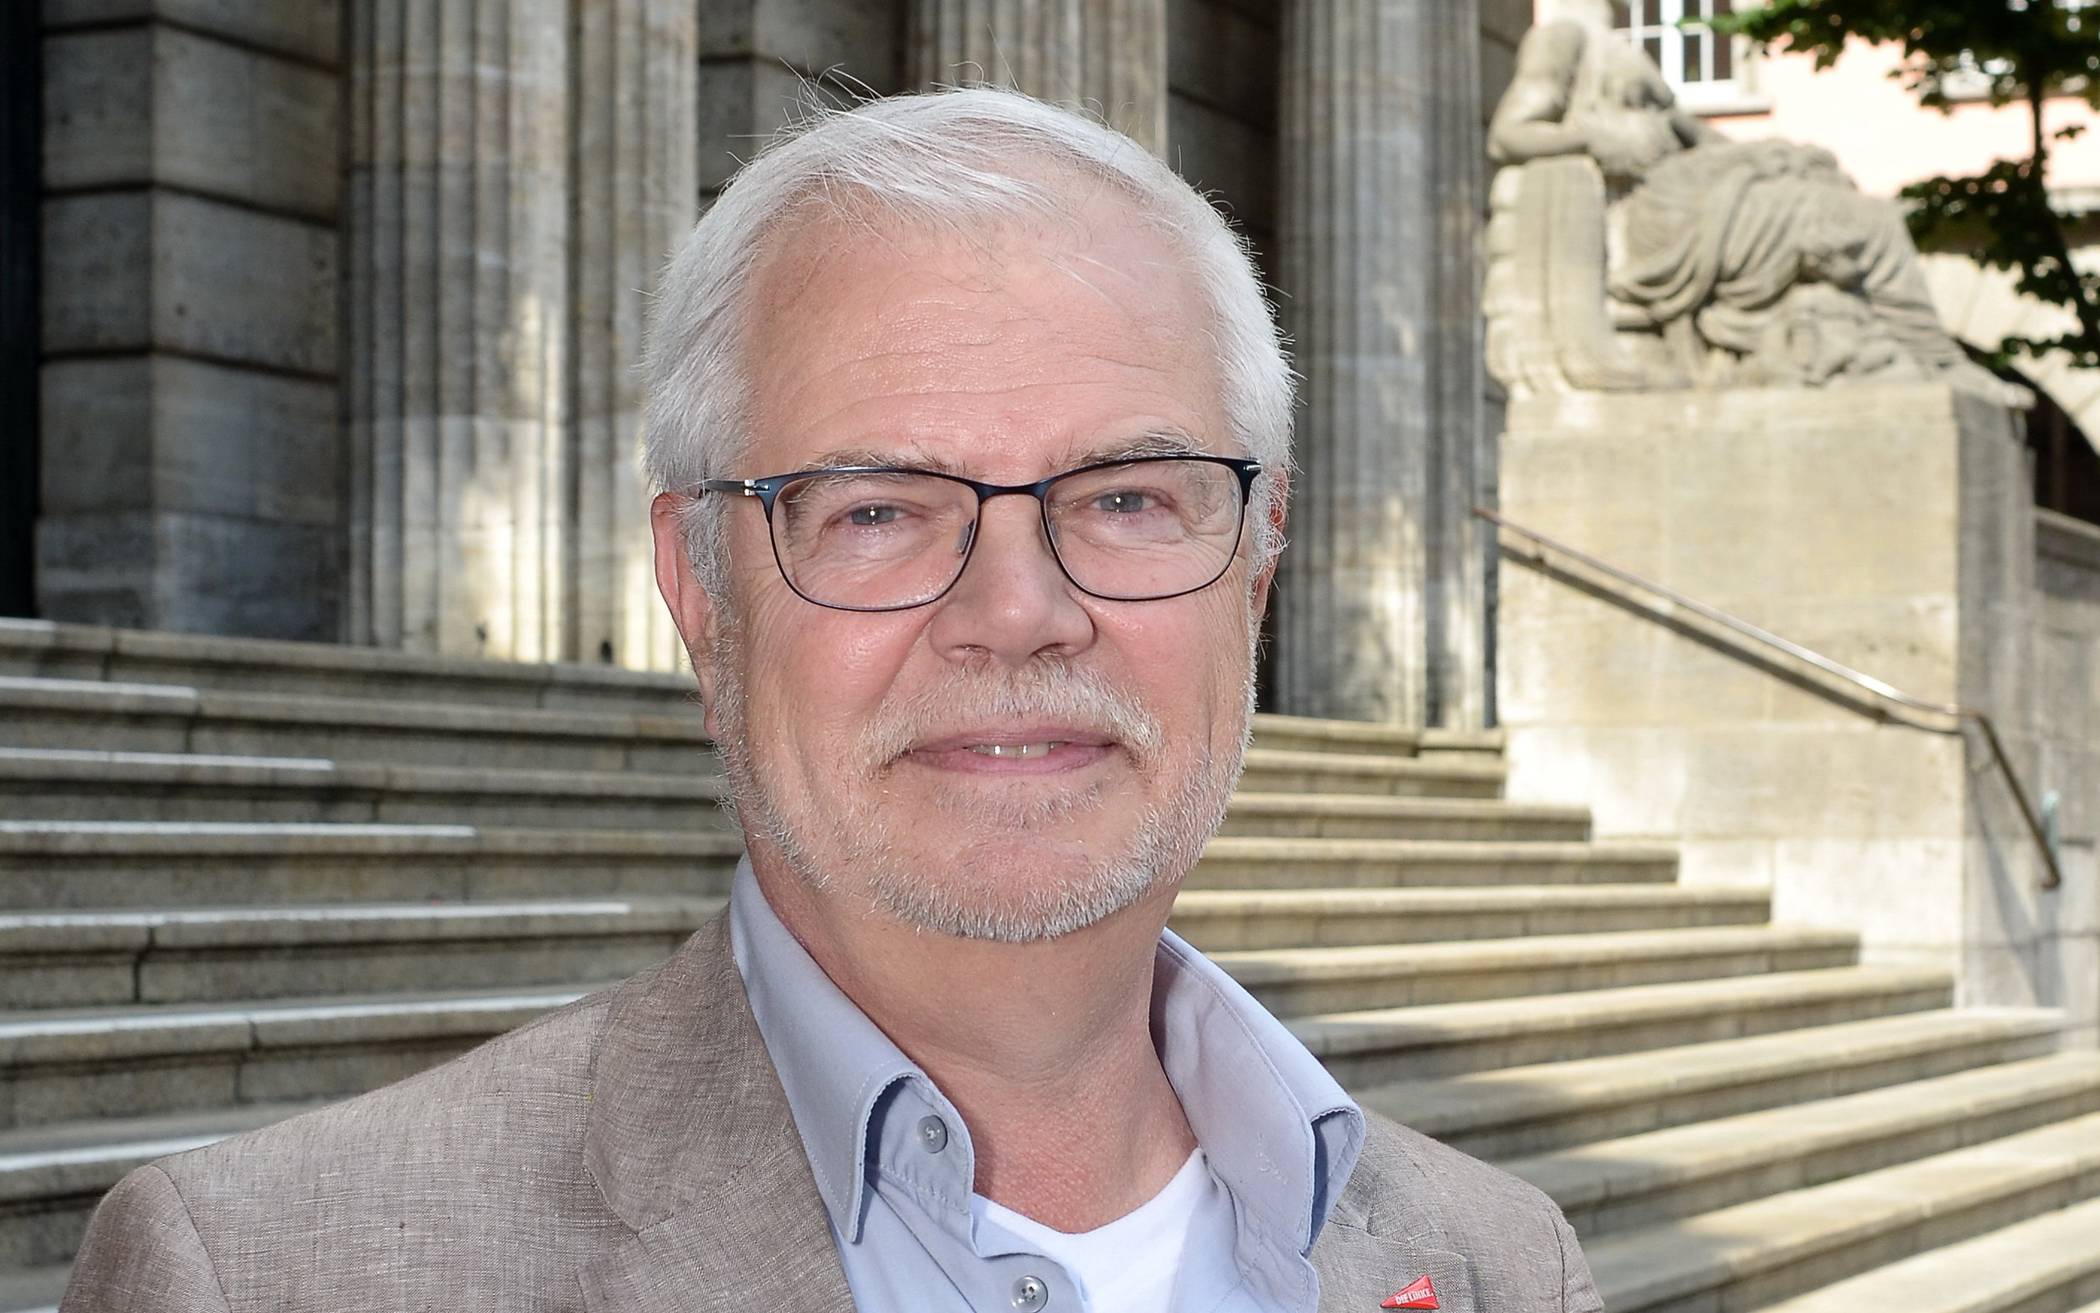  Bernhard Sander, OB-Kandidat der Linken. 